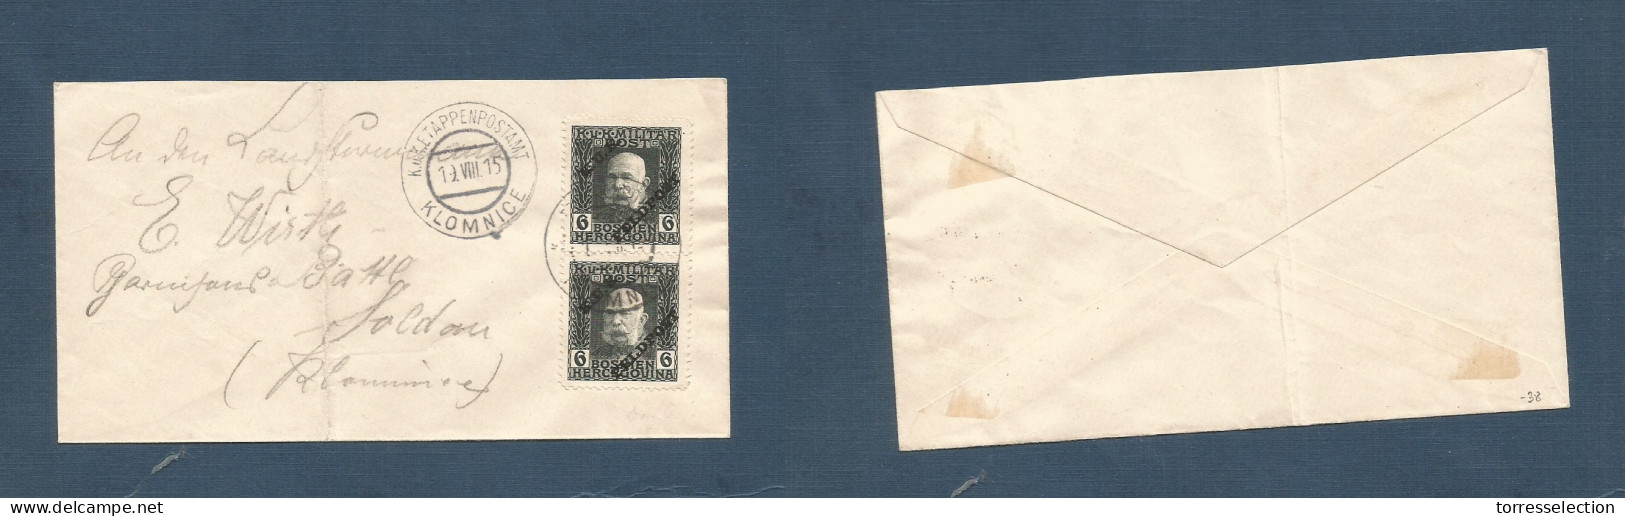 BOSNIA. 1915 (19 Aug) Klomnice Local Multifkd Issue Envelope 12k Rate, Tied Cds. XSALE. - Bosnia And Herzegovina